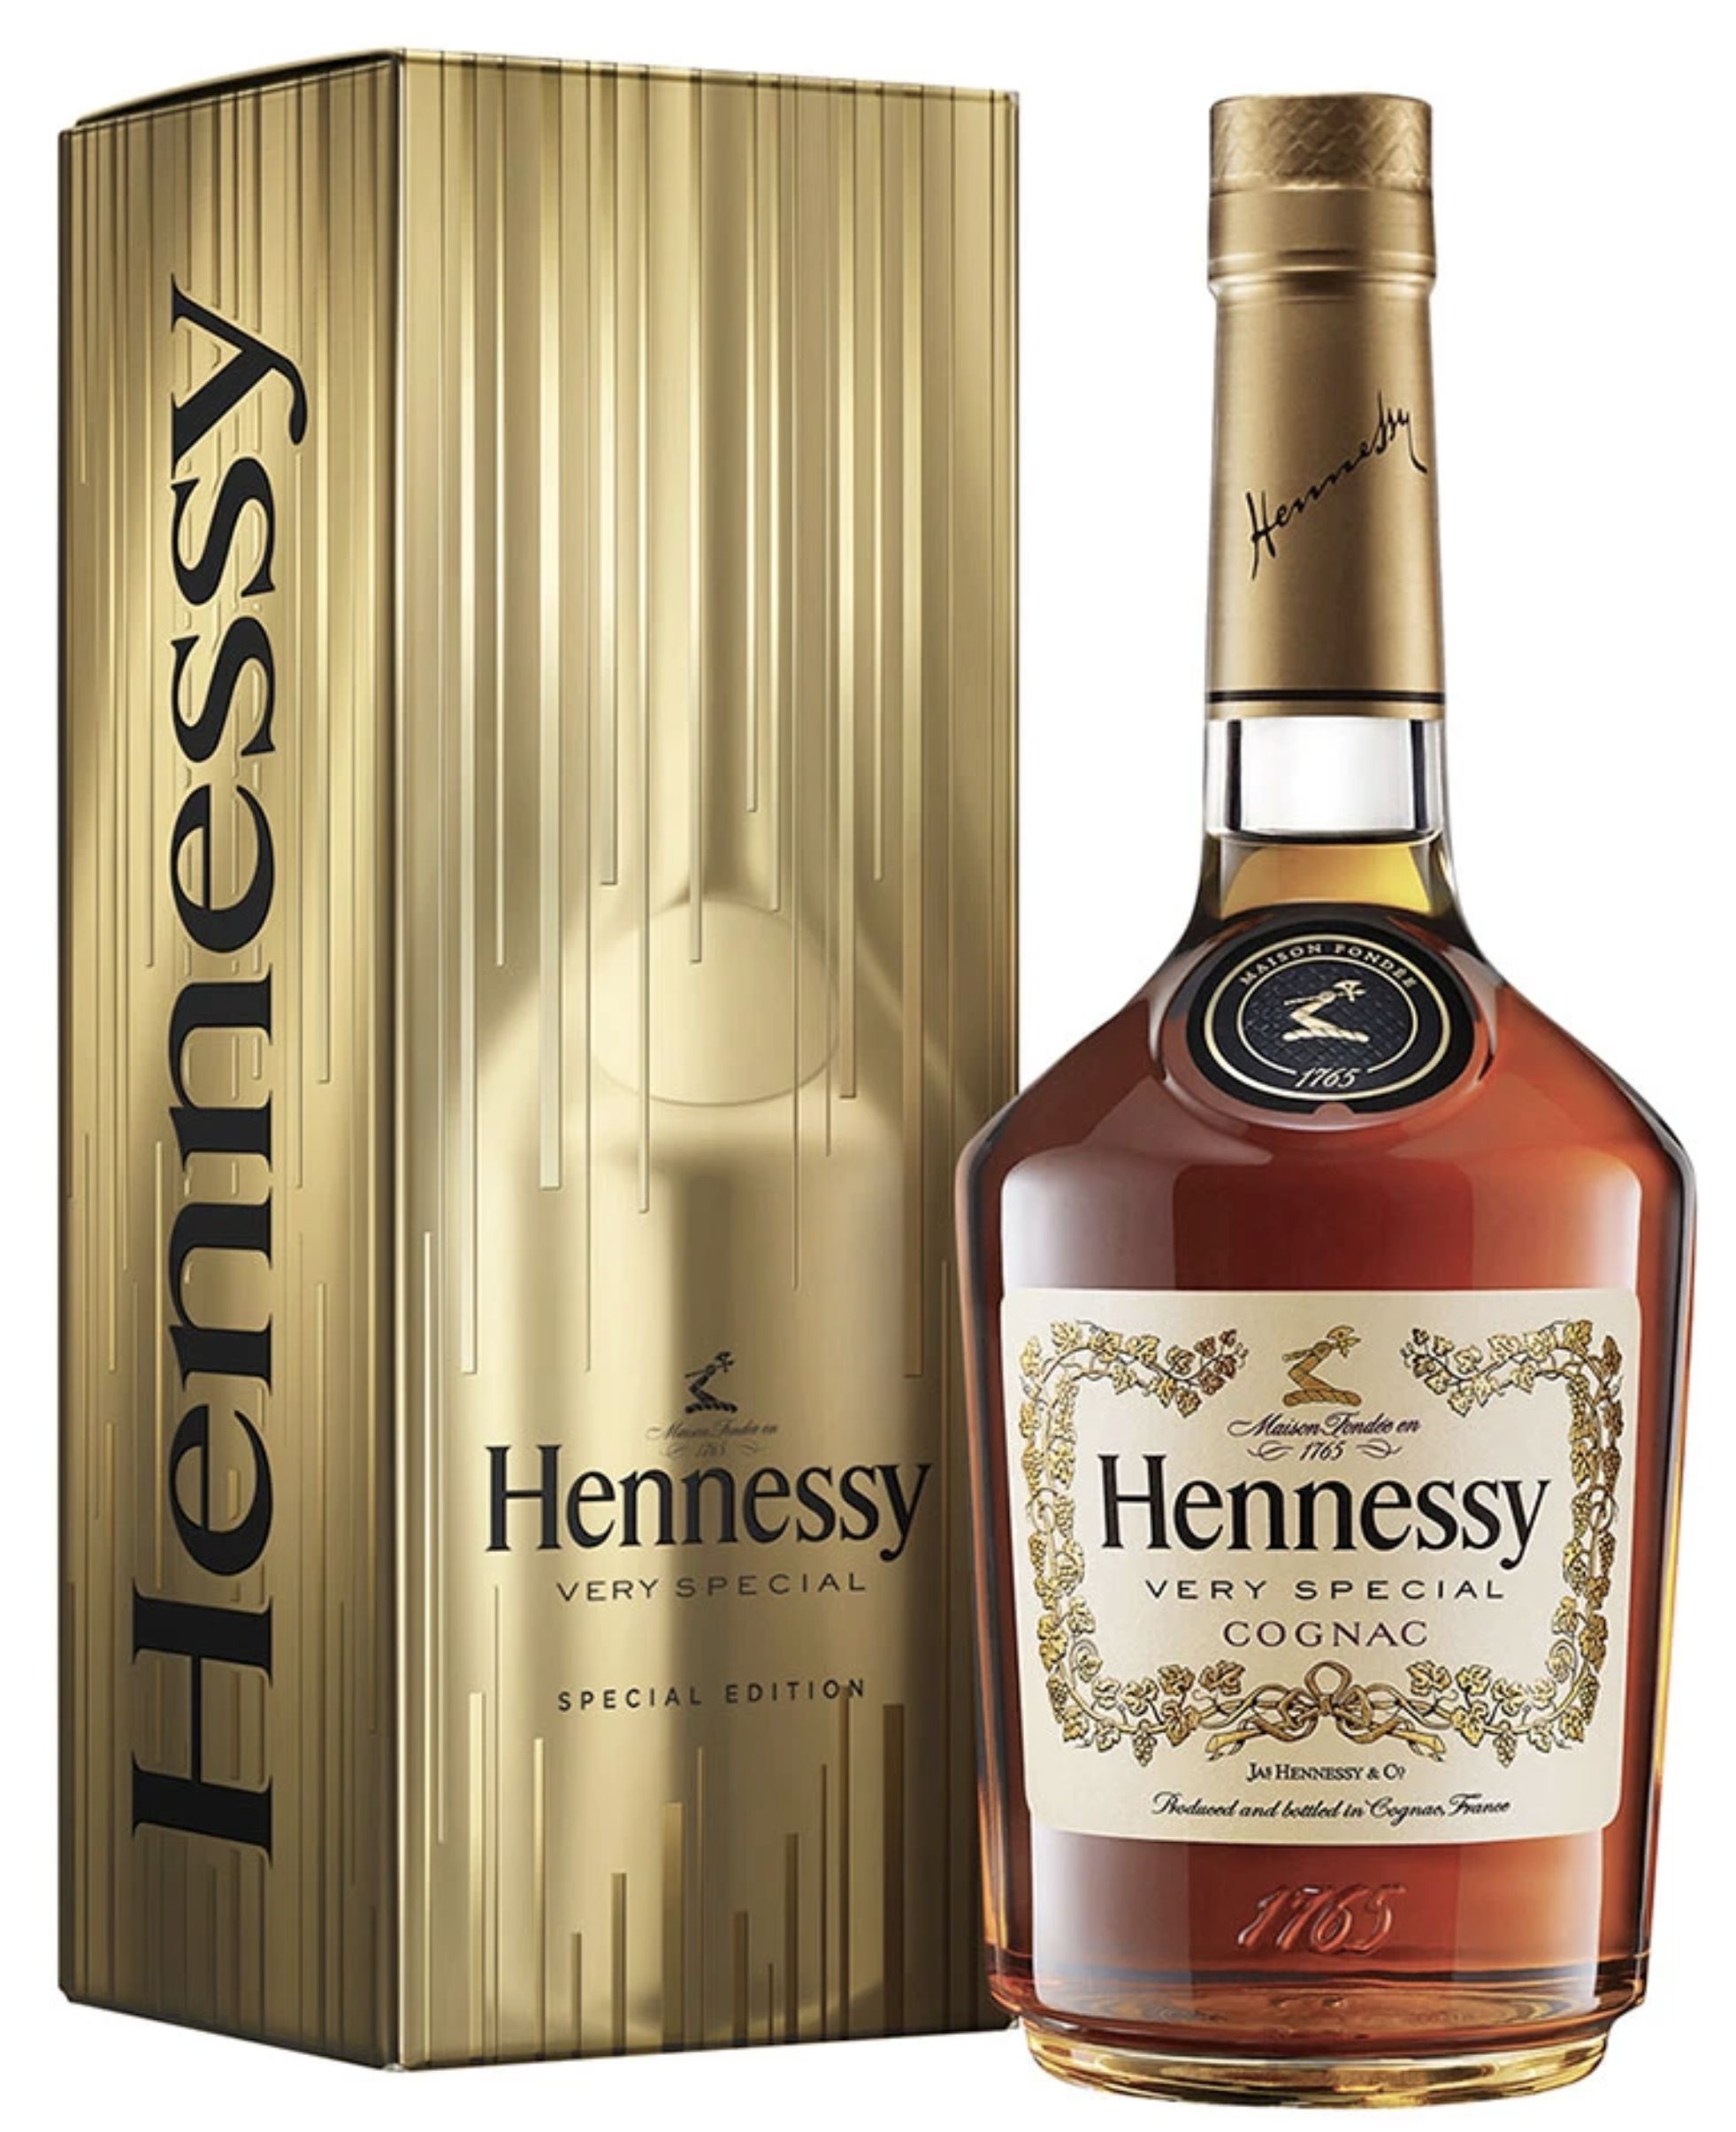 Hennessy cognac цена. Коньяк Хеннесси вс 0.7 вери Спешиал. Hennessy vs Cognac 700ml. Хеннесси вс 0.5 золотой. Hennessy Cognac 0.7.